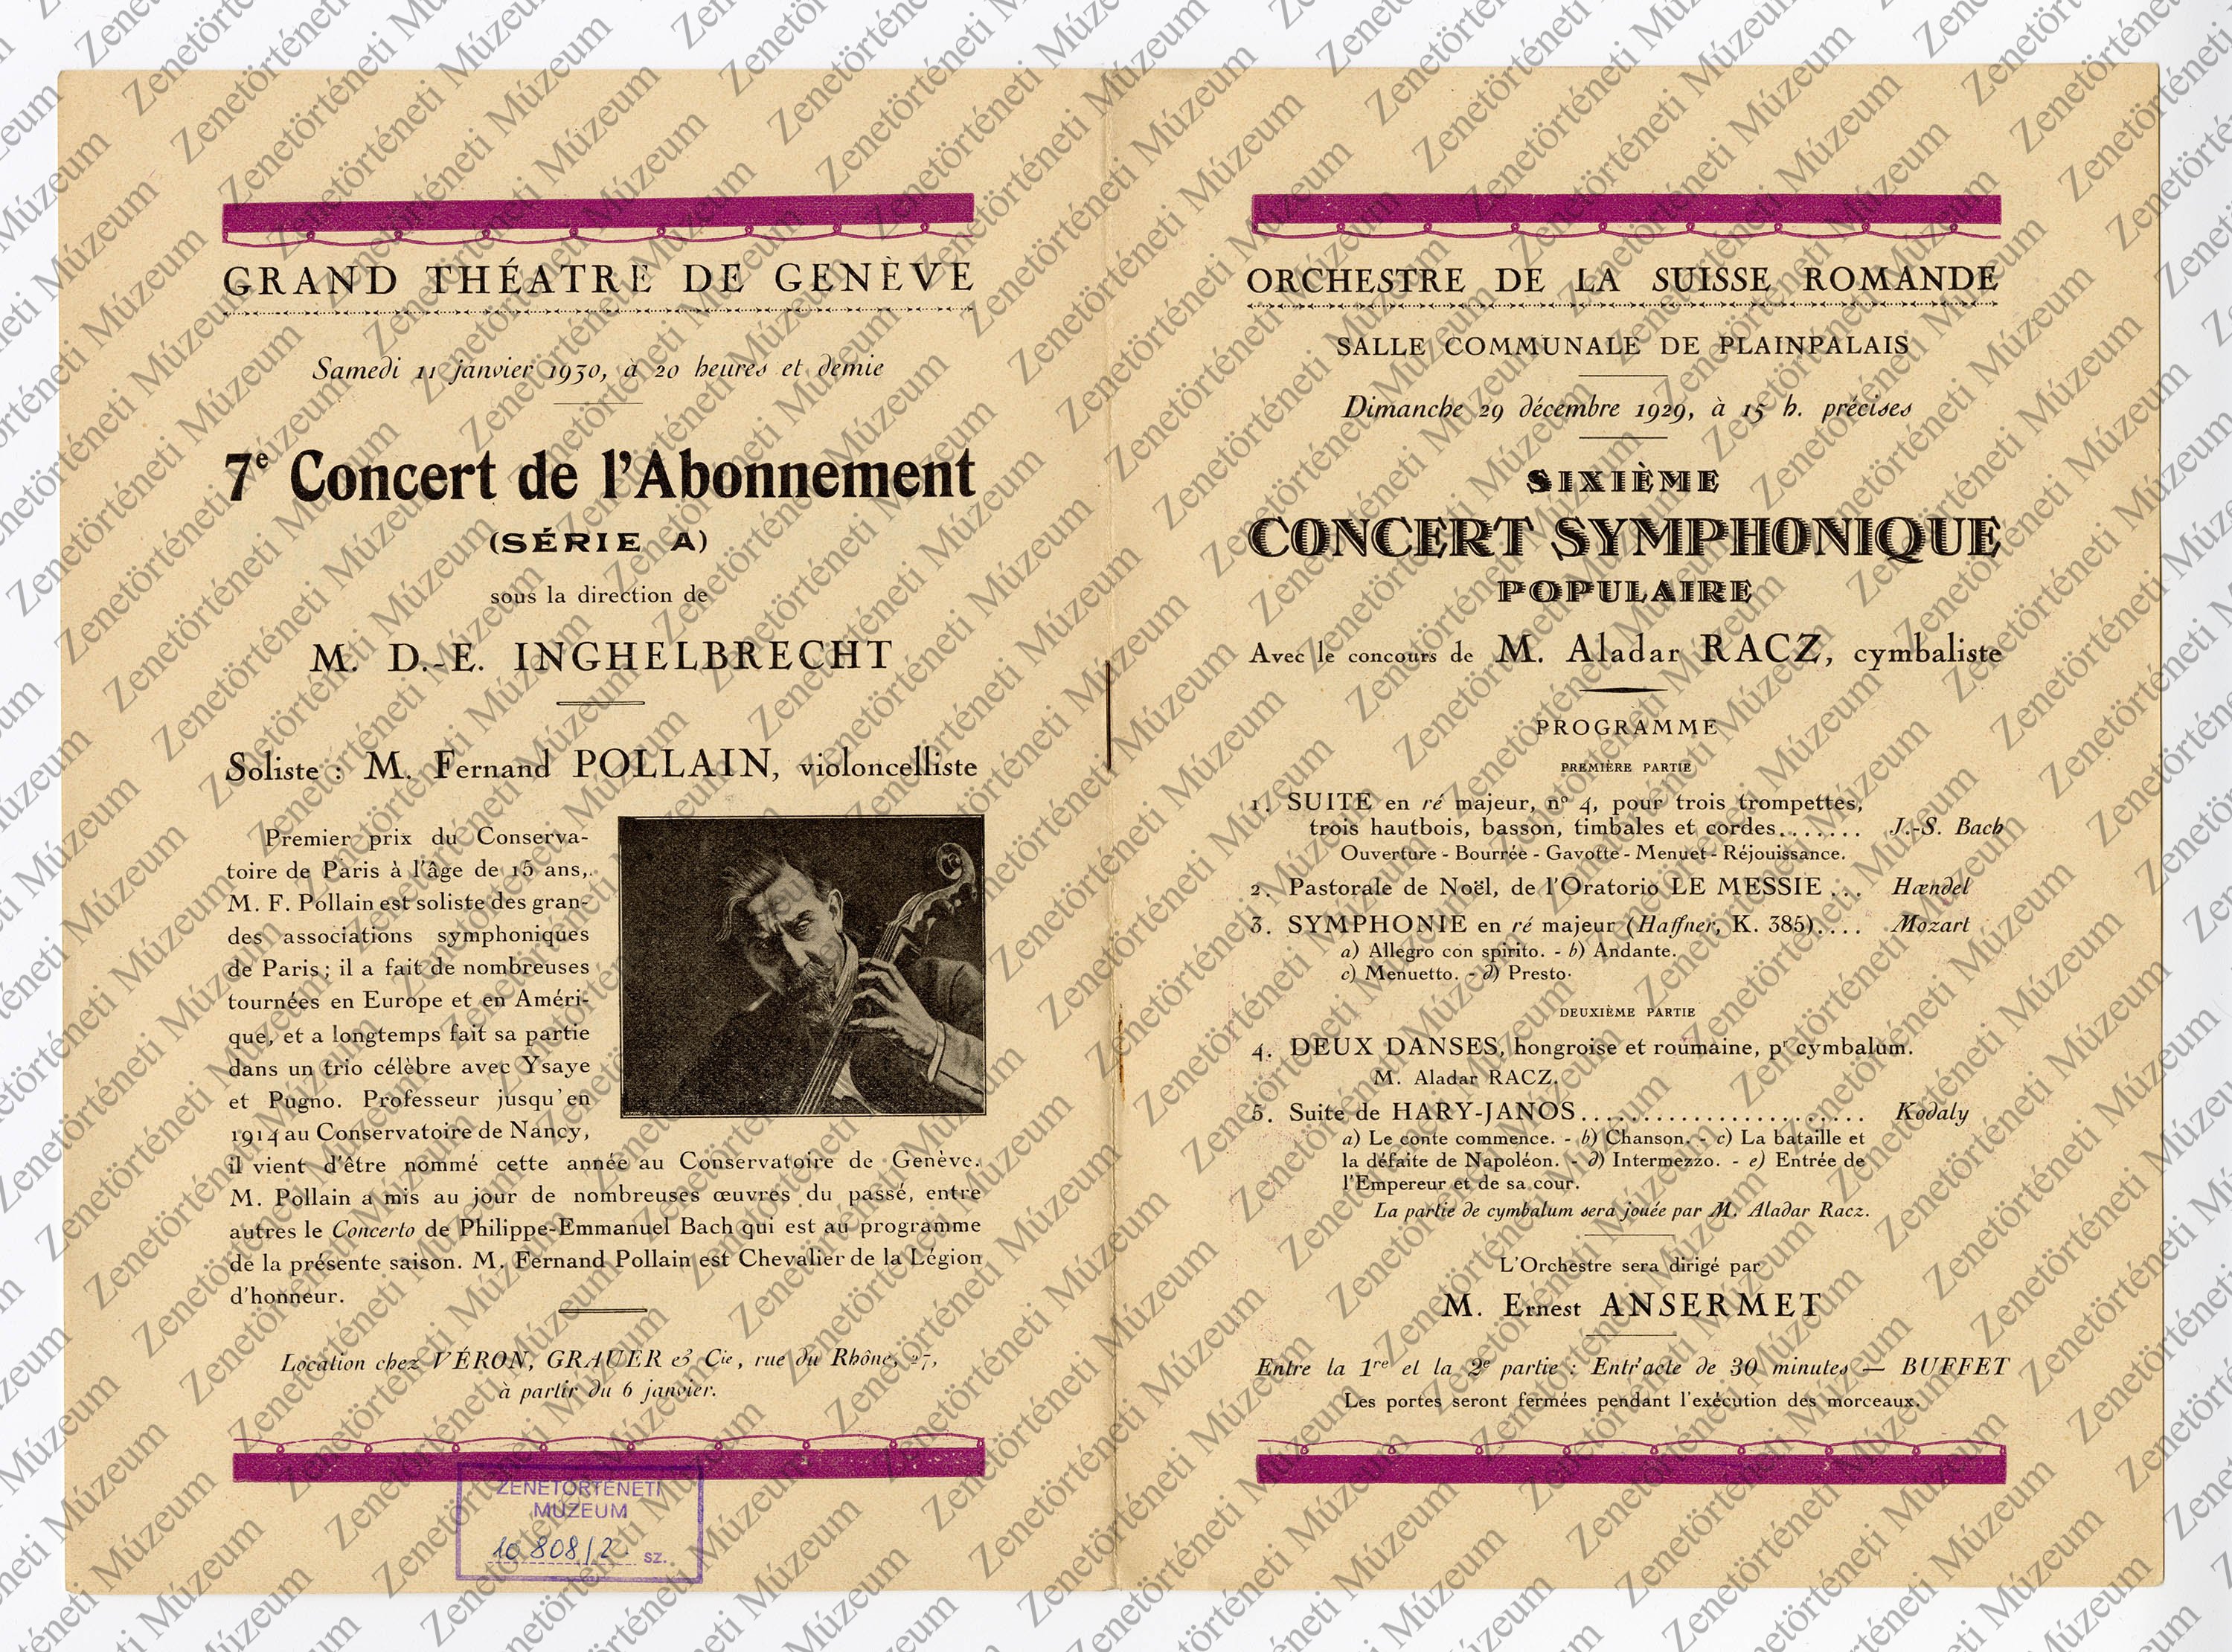 Az Orchestre de la Suisse Romande műsorfüzete, 1929. dec. (2) (Zenetörténeti Múzeum CC BY-NC-SA)